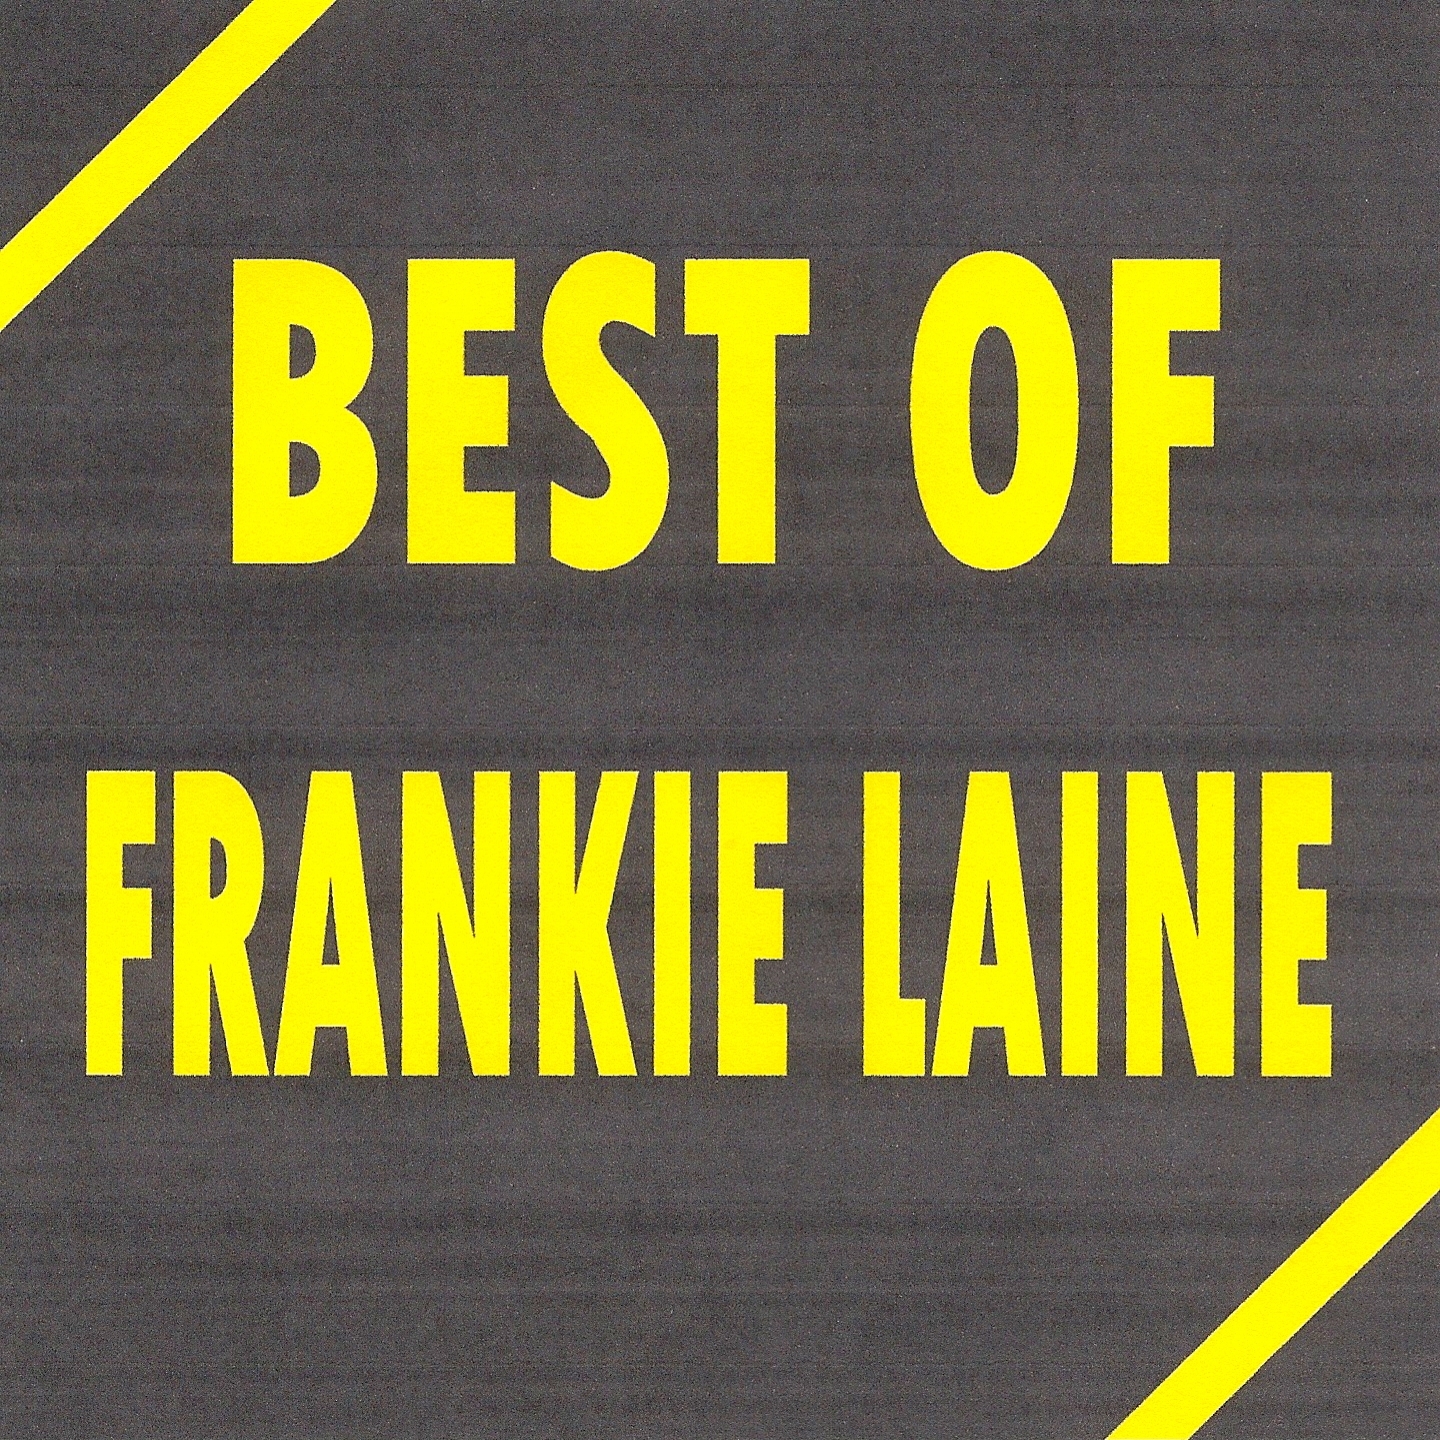 Best of Frankie Laine